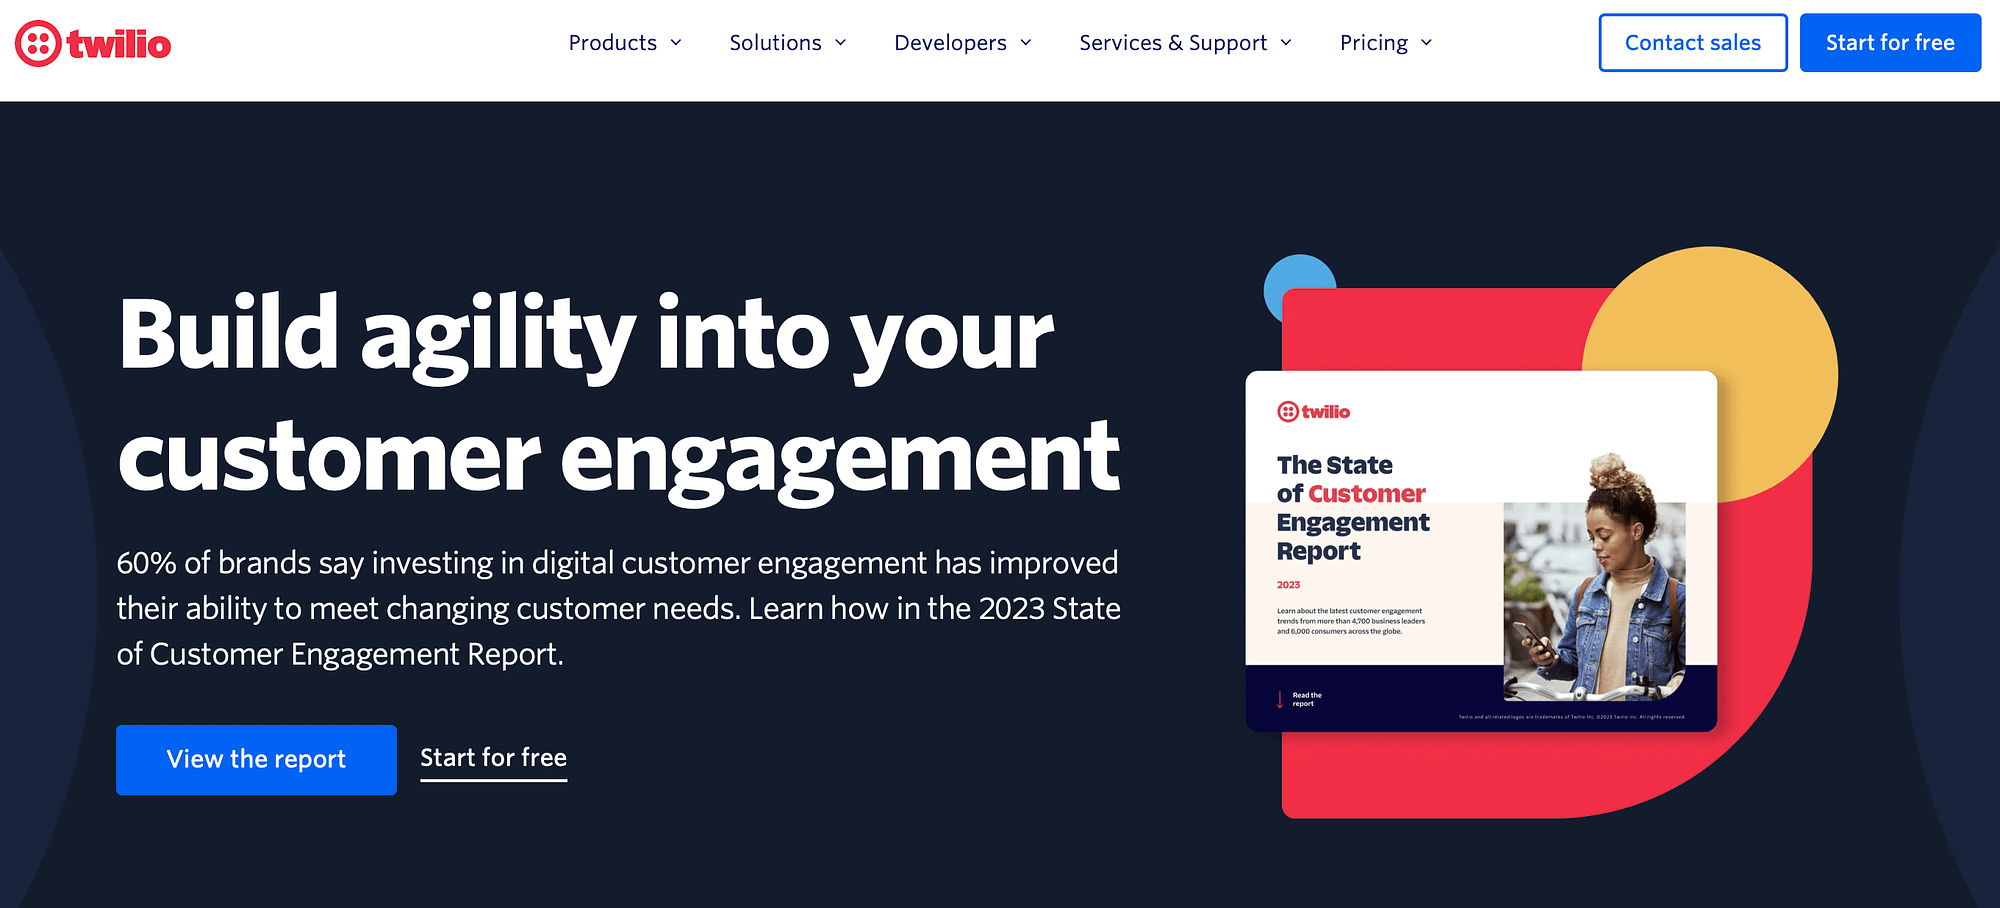 Twilio homepage